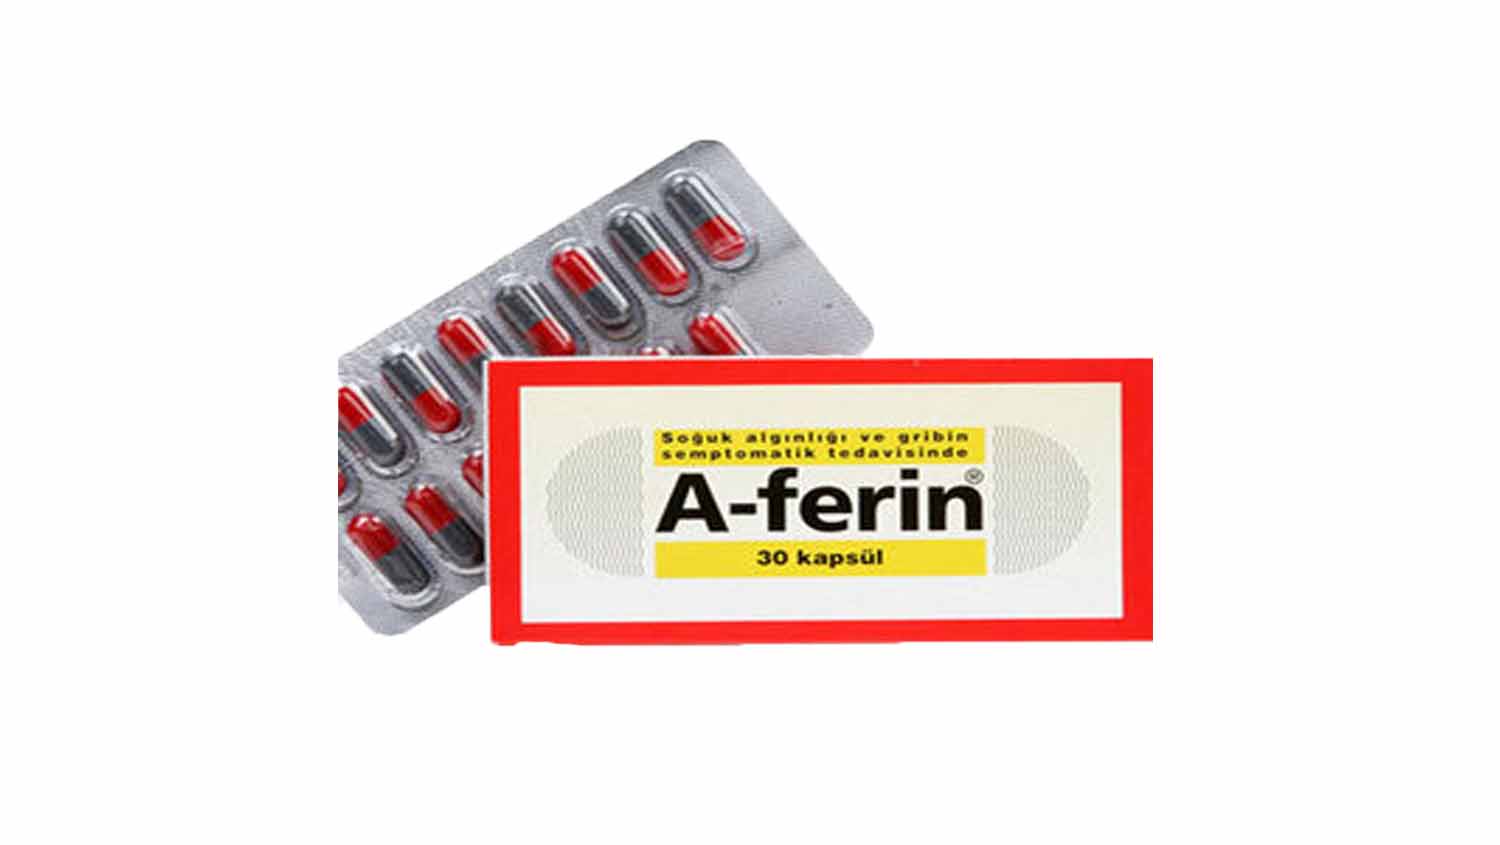 a-ferin لماذا يستخدم